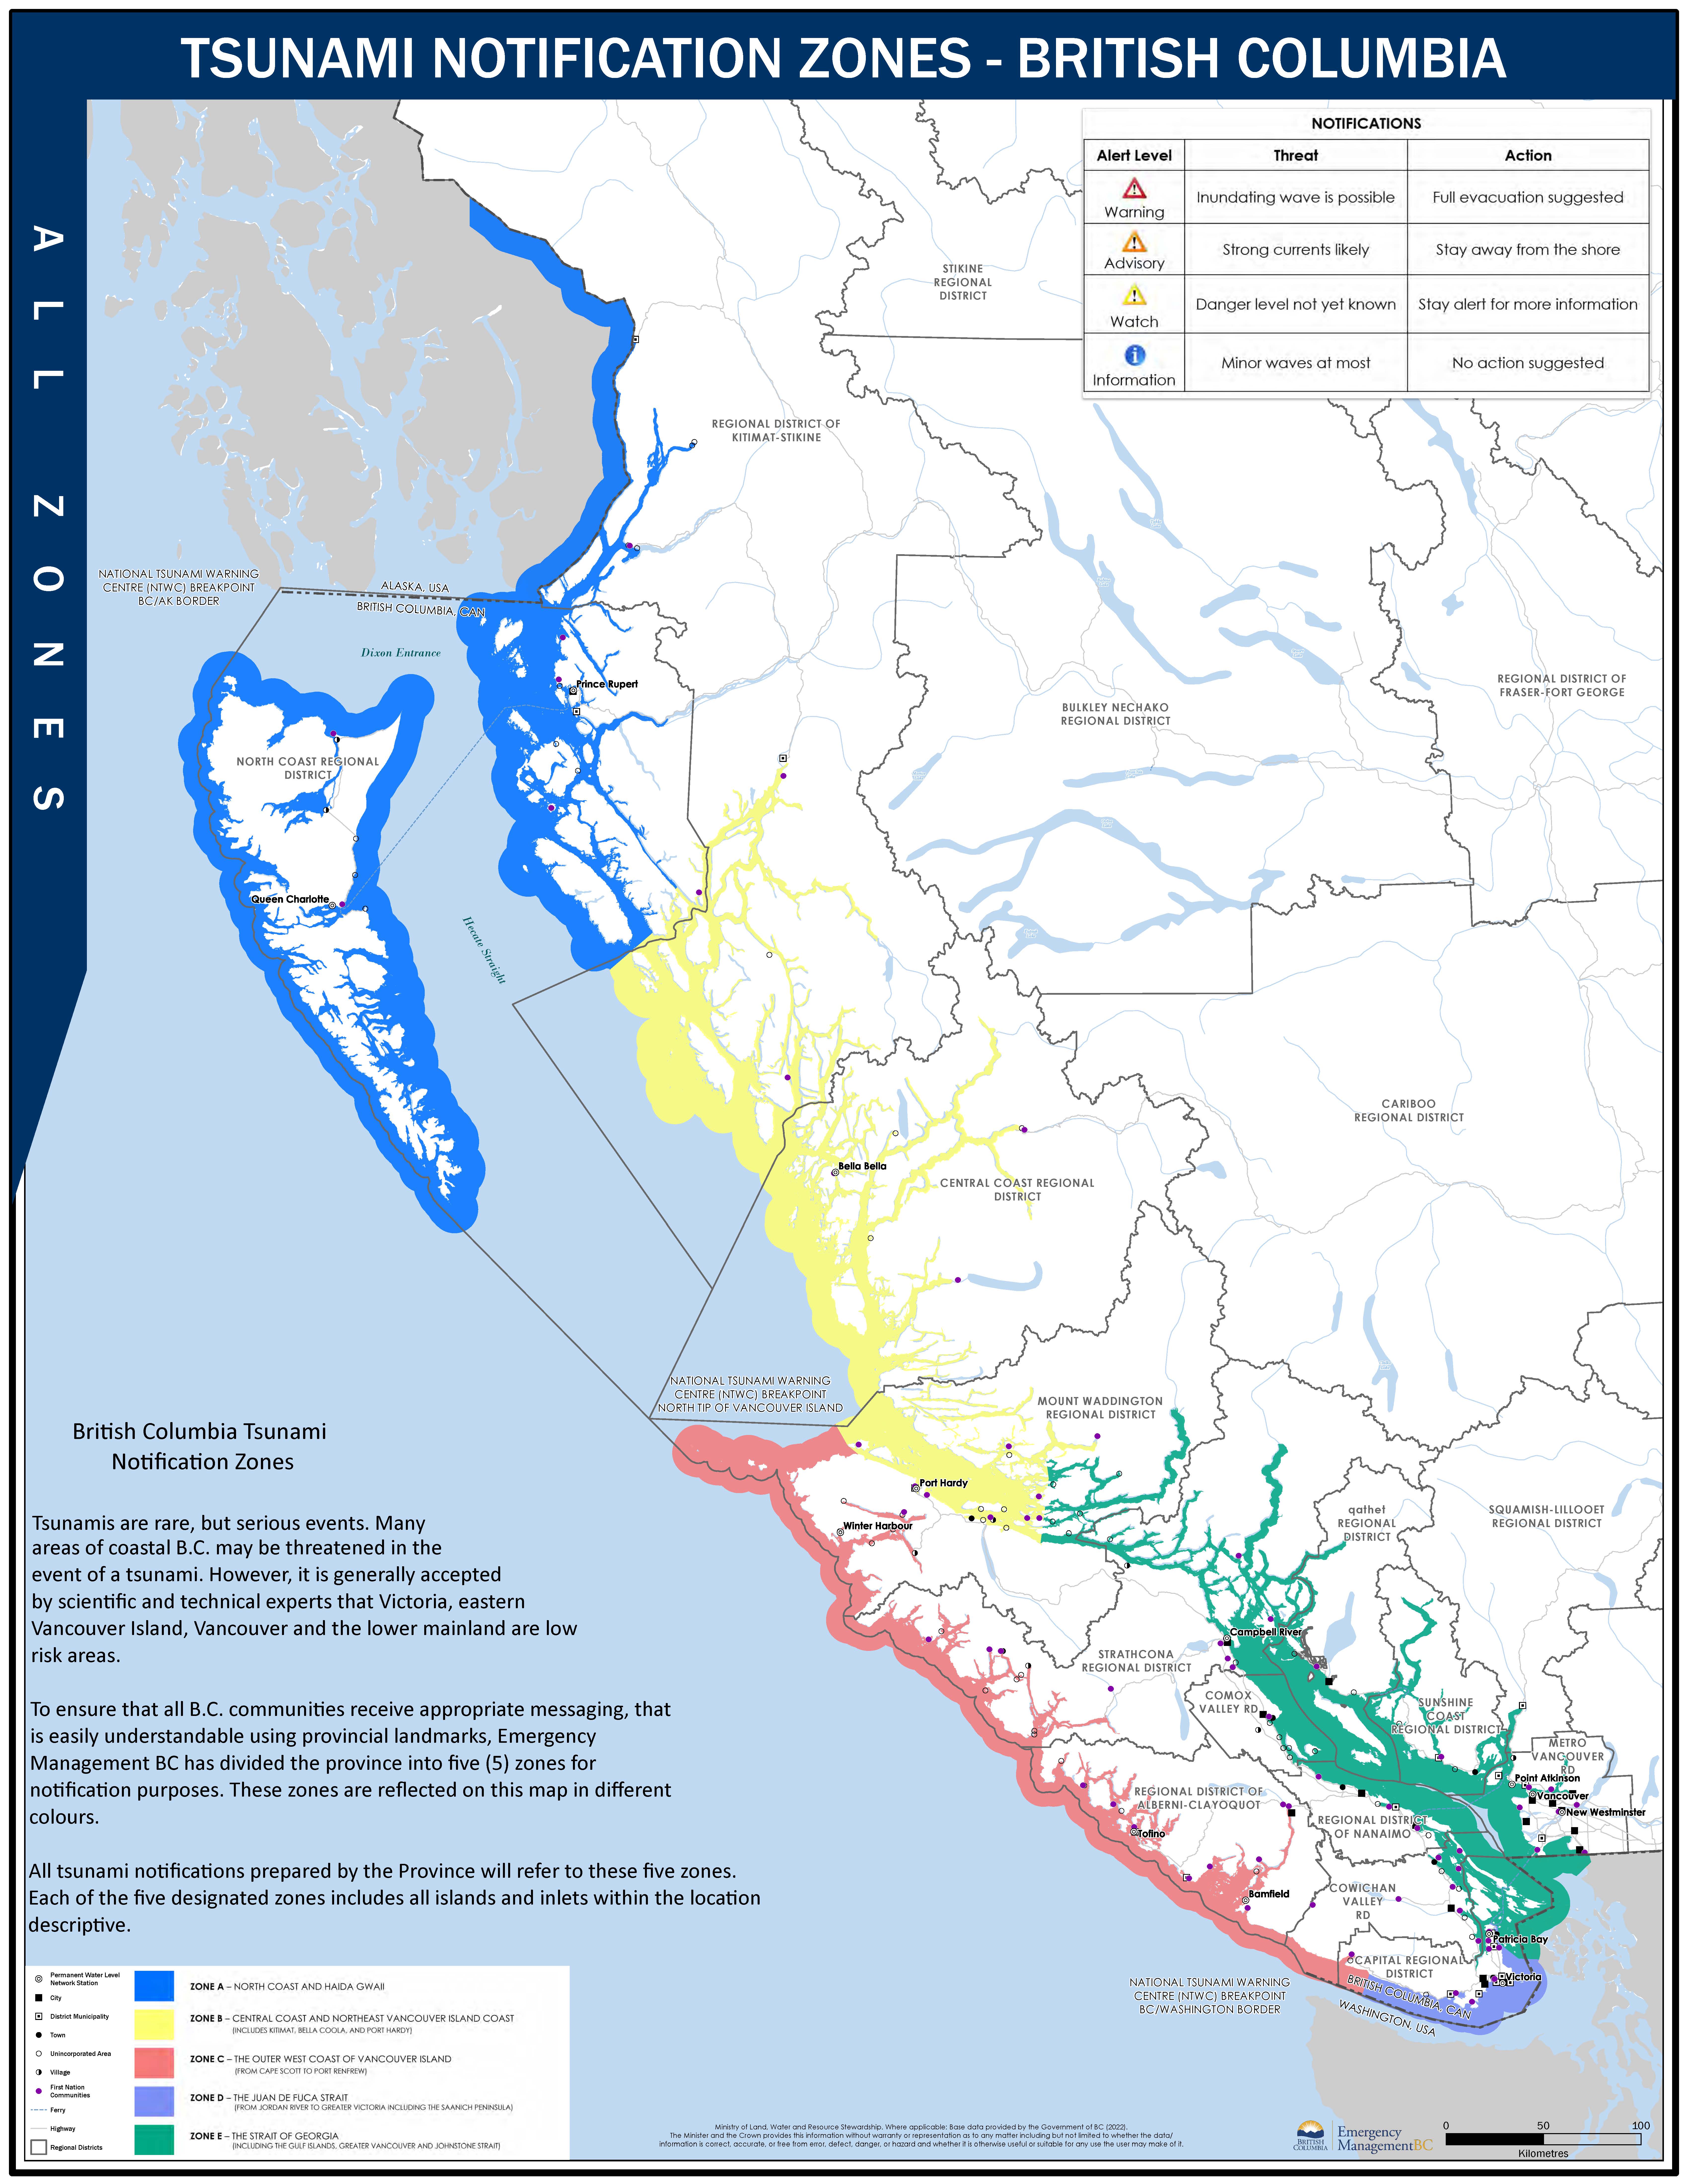 graphic depicting the 5 tsunami notification zones of B.C.